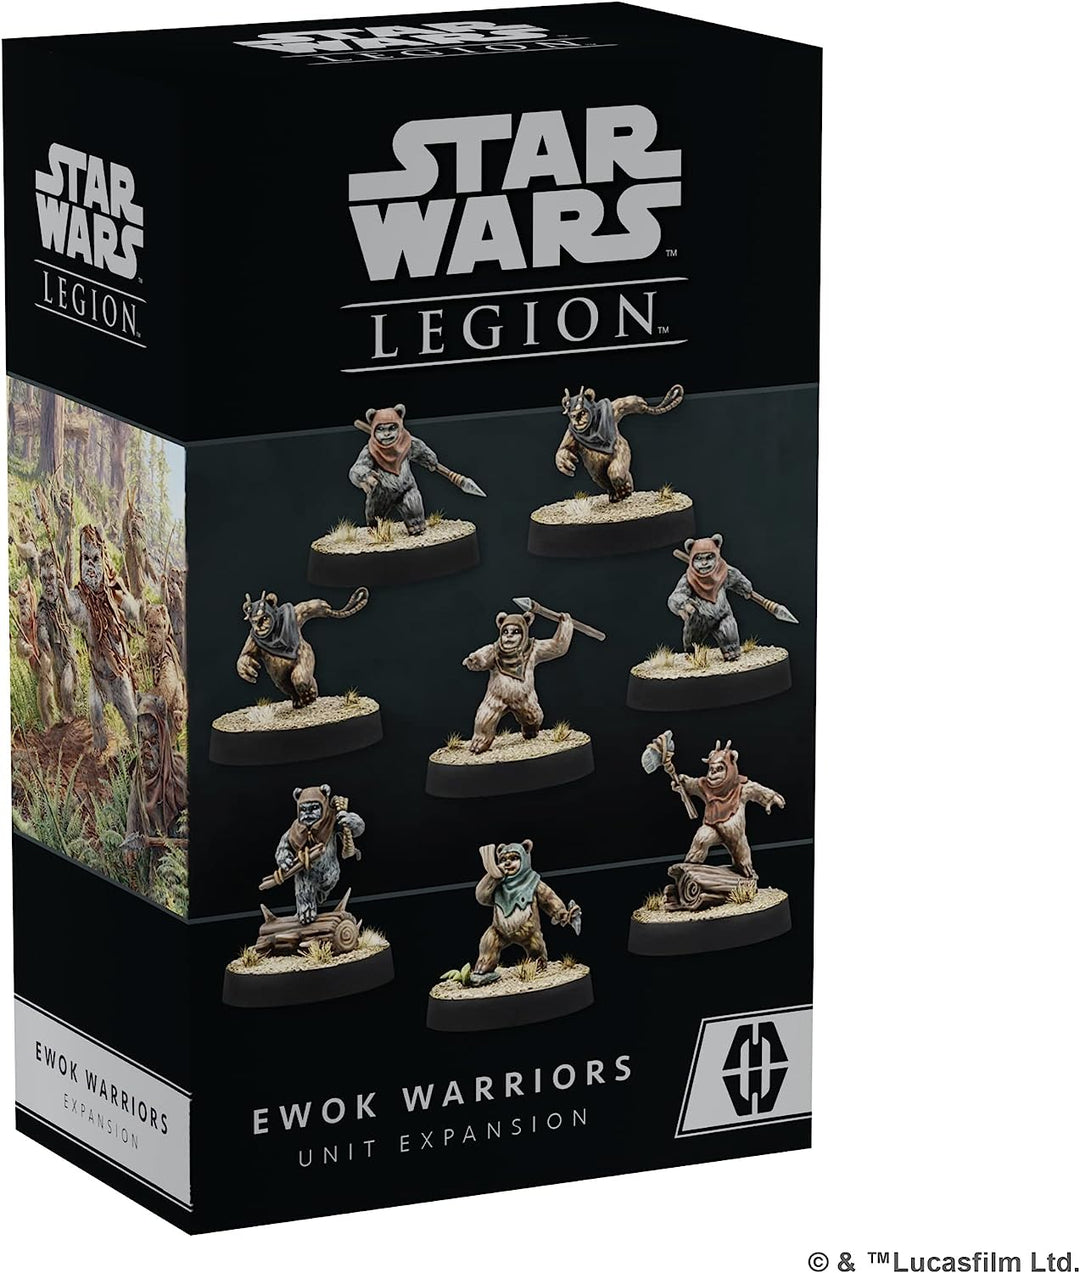 Star Wars Legion: Ewok Warriors Unit